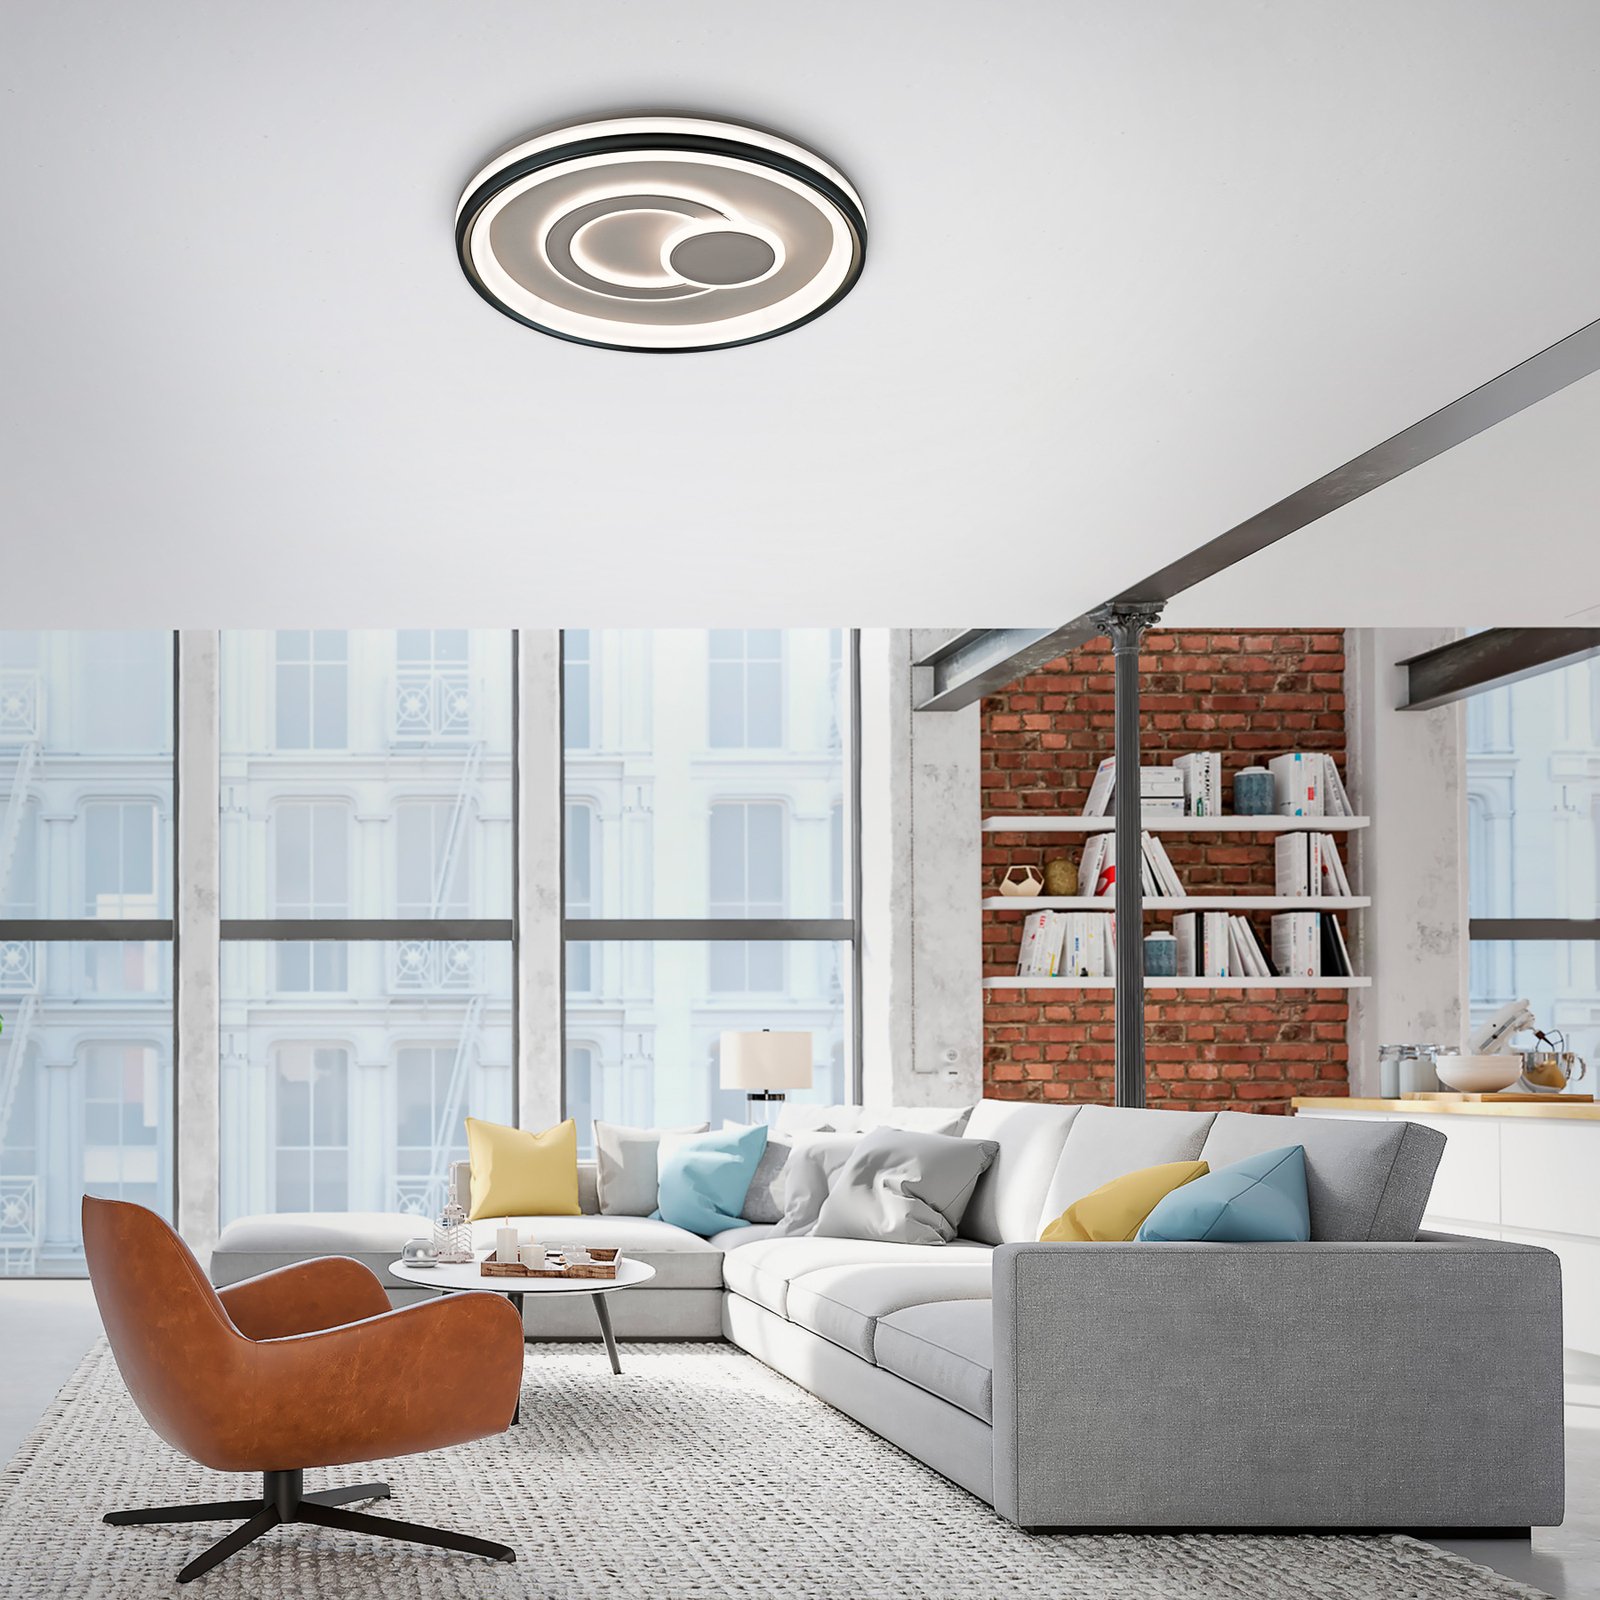 JUST LIGHT. Φωτιστικό οροφής Minelli LED, Ø 50 cm, με δυνατότητα ρύθμισης